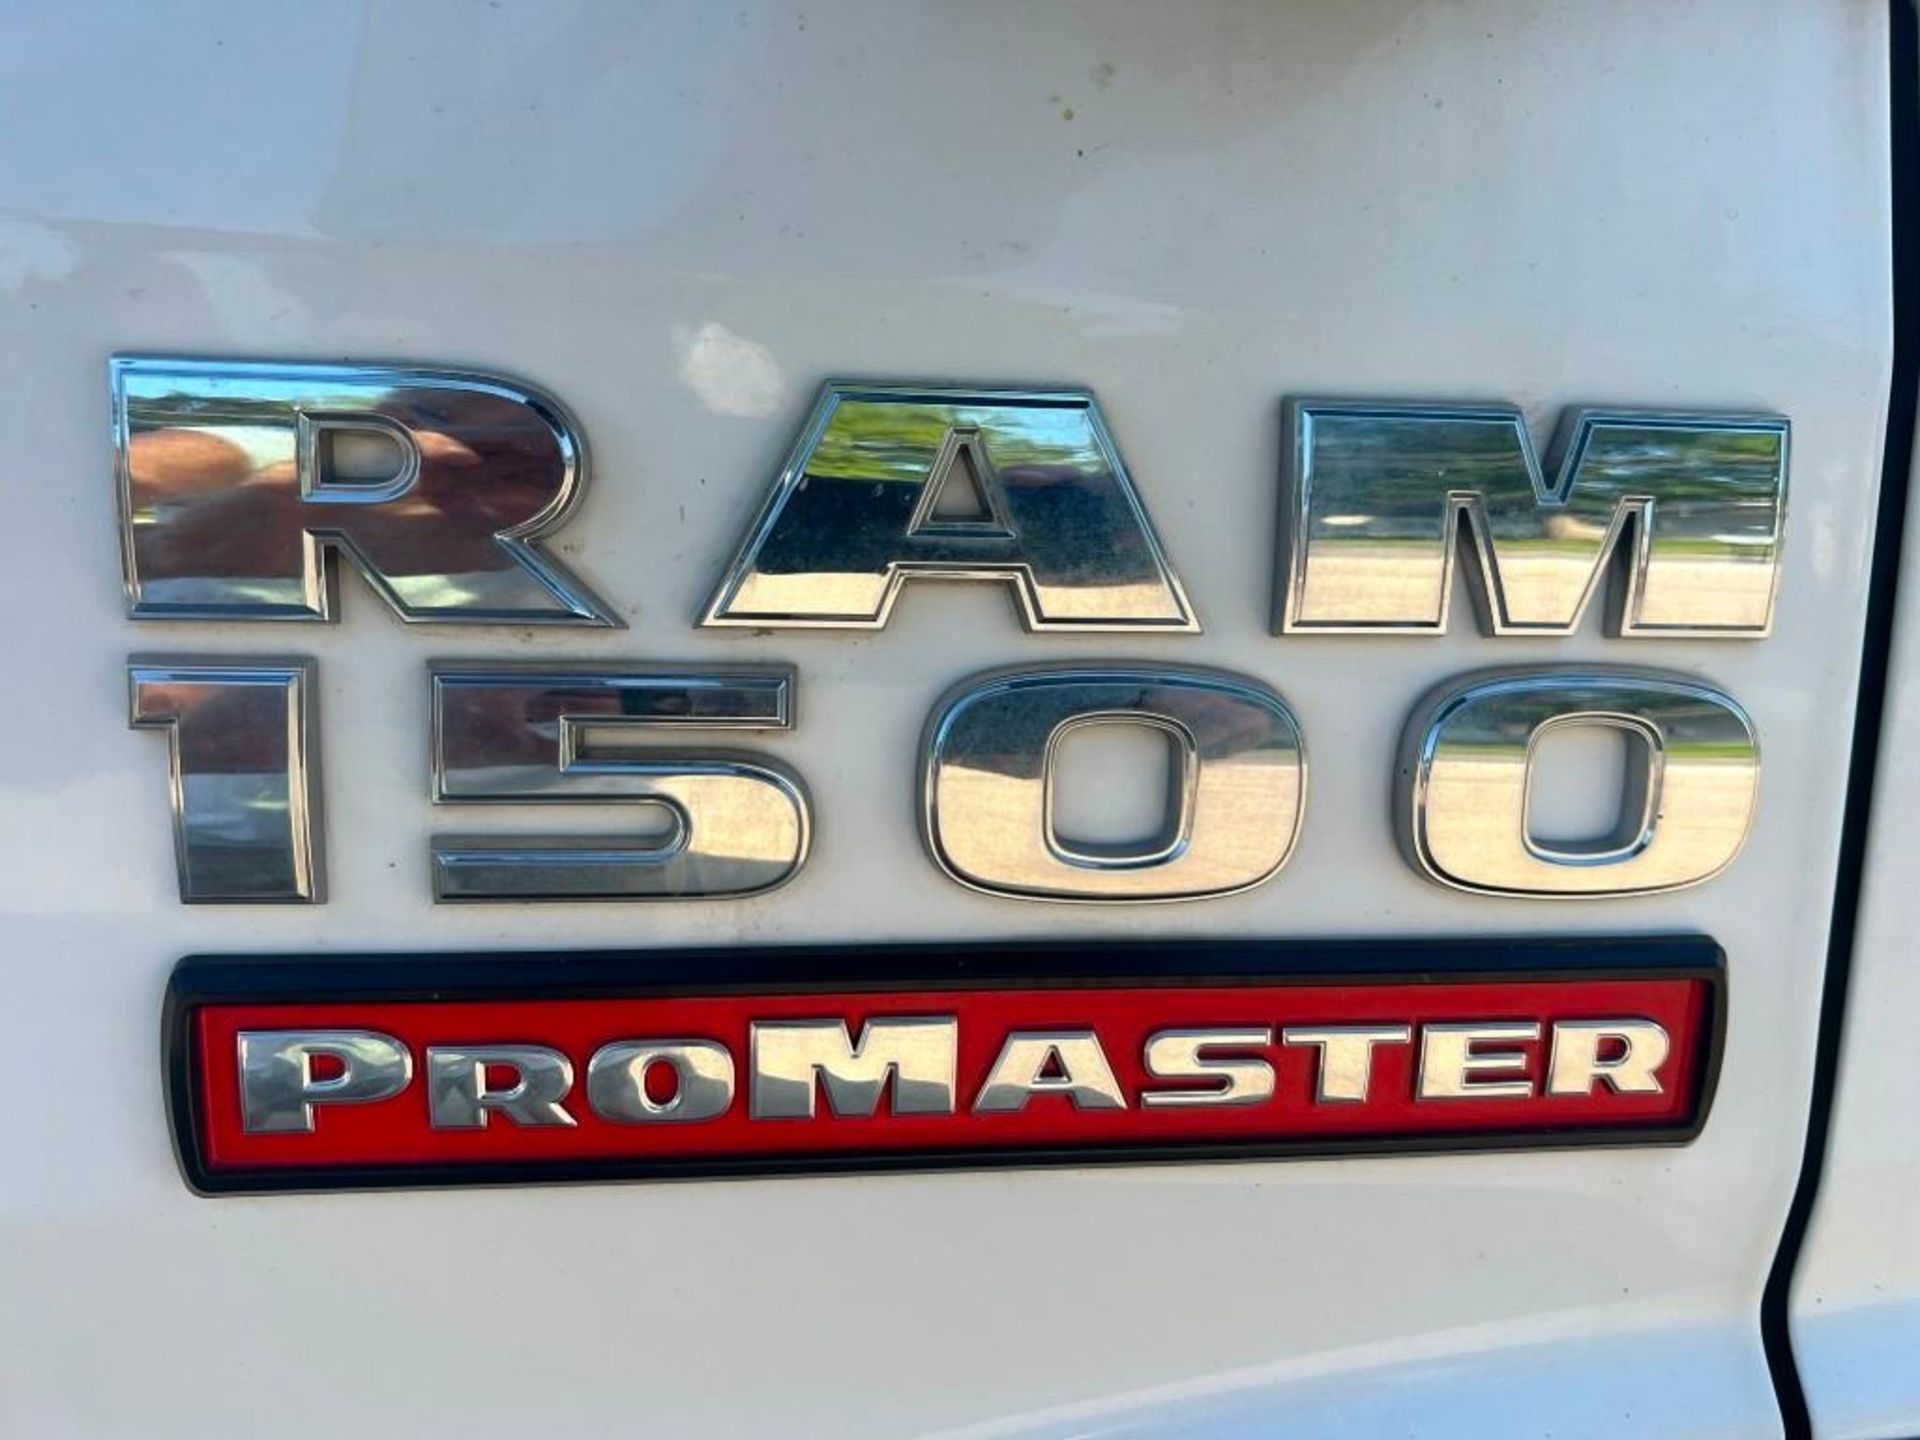 2017 Dodge Ram Promaster 1500 cargo van, 3.6L, automatic transmission, miles: 127k, VIN: - Image 13 of 26